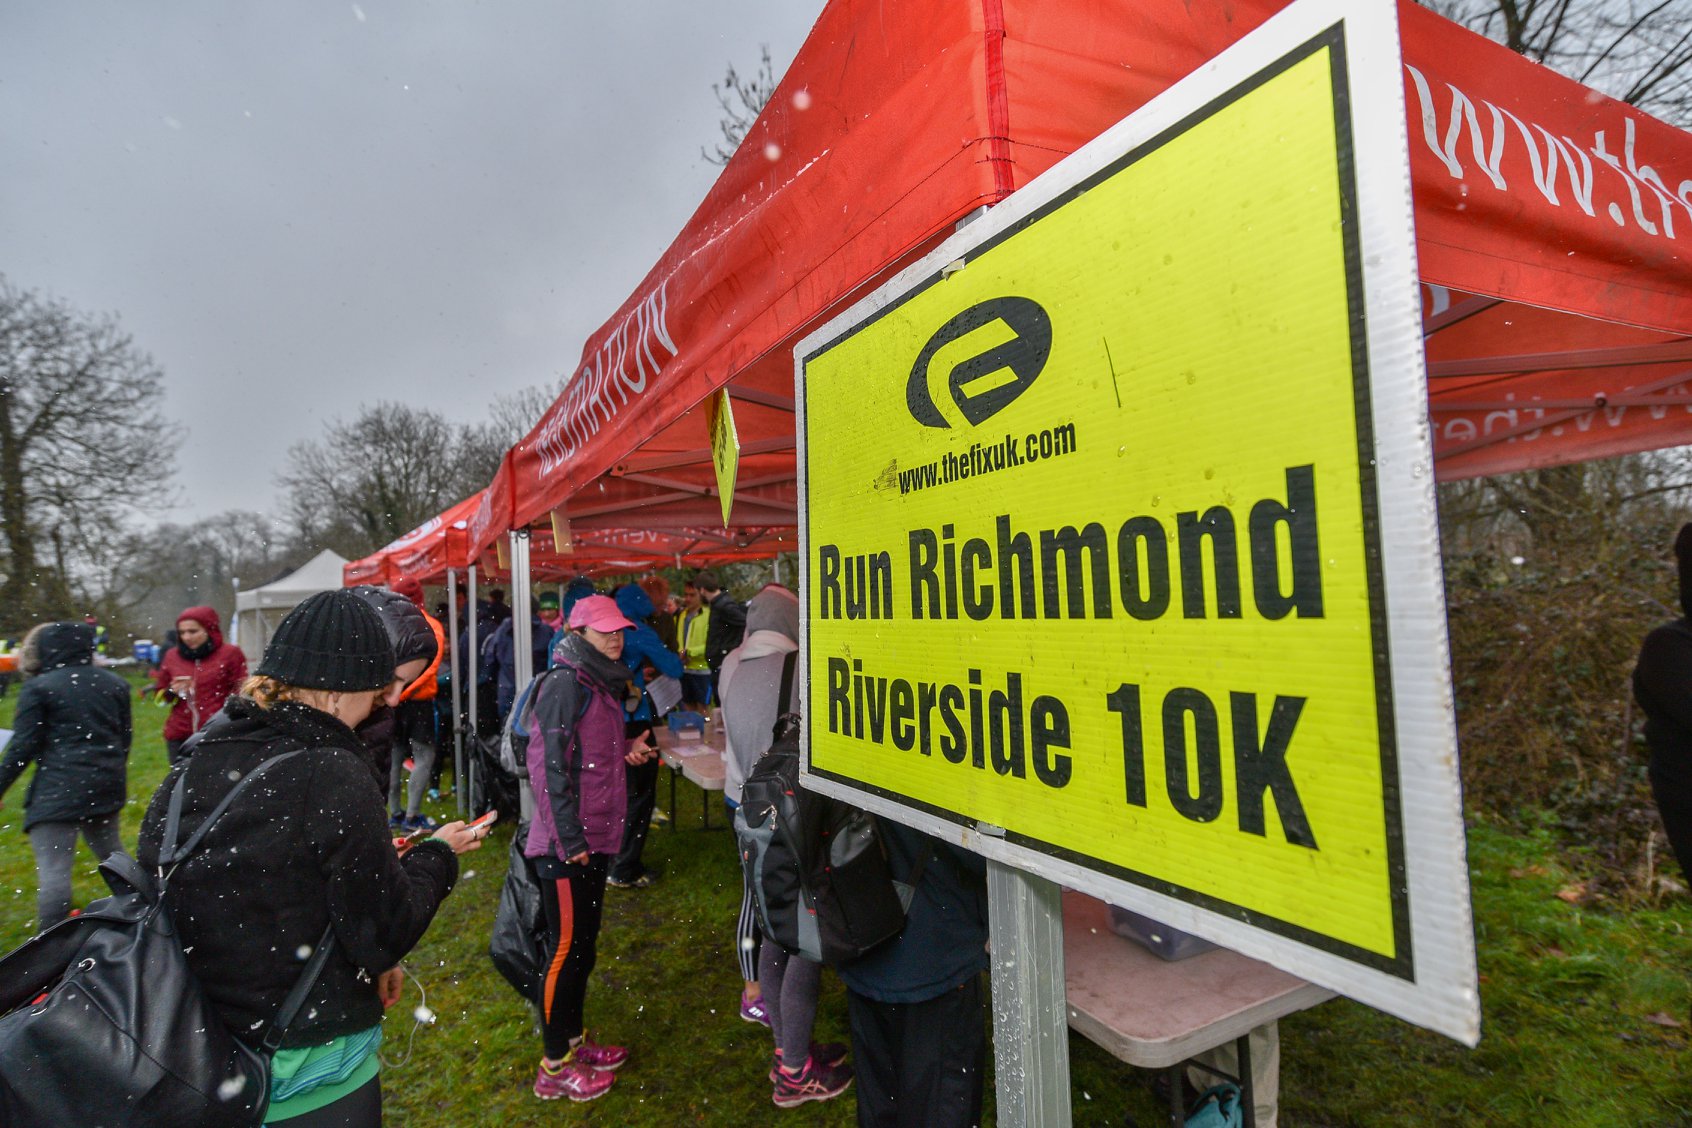 The 10k Richmond London Riverside Spring Run